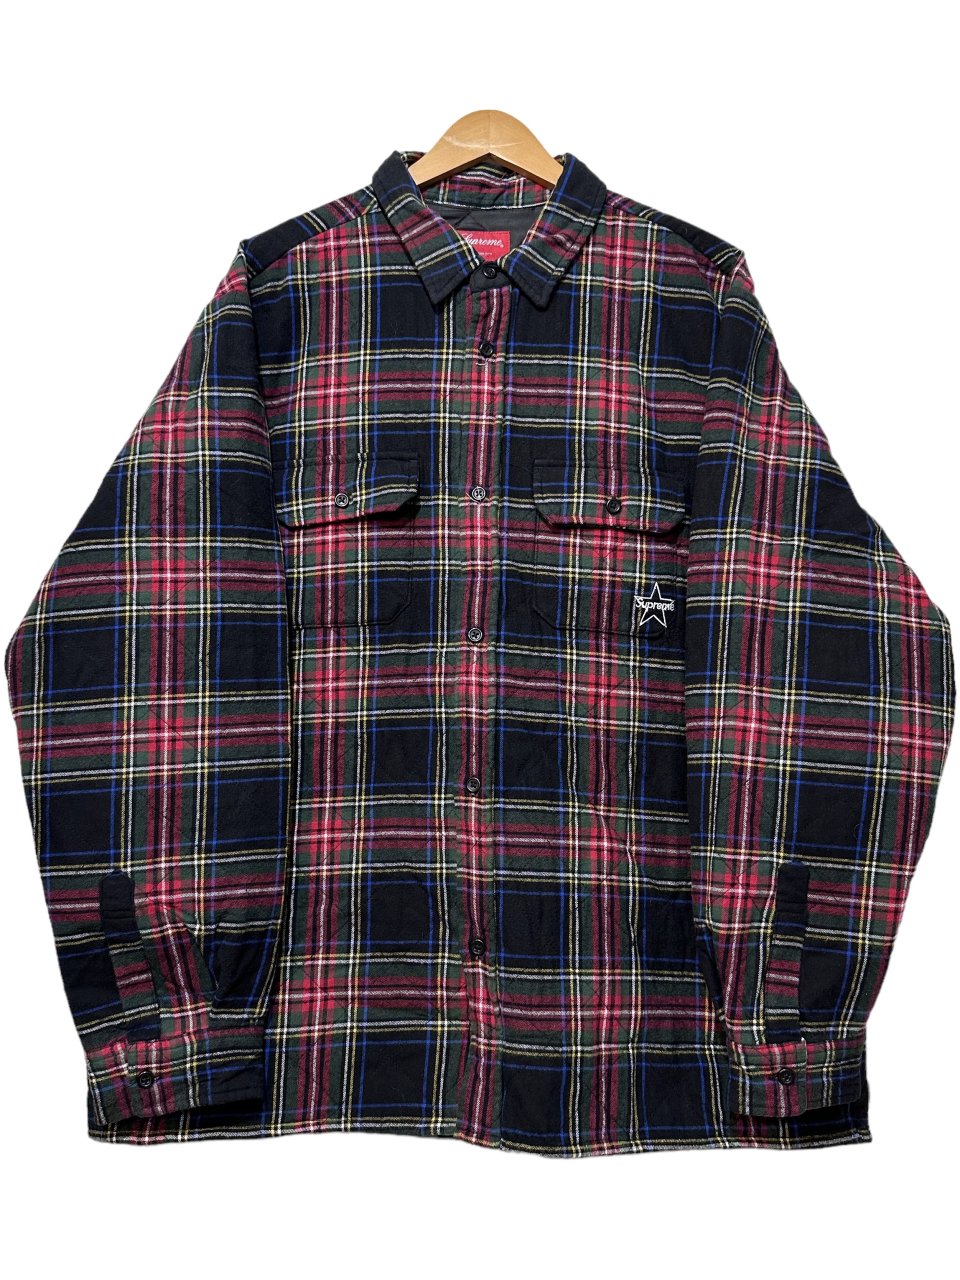 21AW SUPREME Quilted Plaid Flannel Shirt 黒 XL シュプリーム キルテッド フランネルシャツ チェック  ブラック 2021秋冬 - NEWJOKE ONLINE STORE